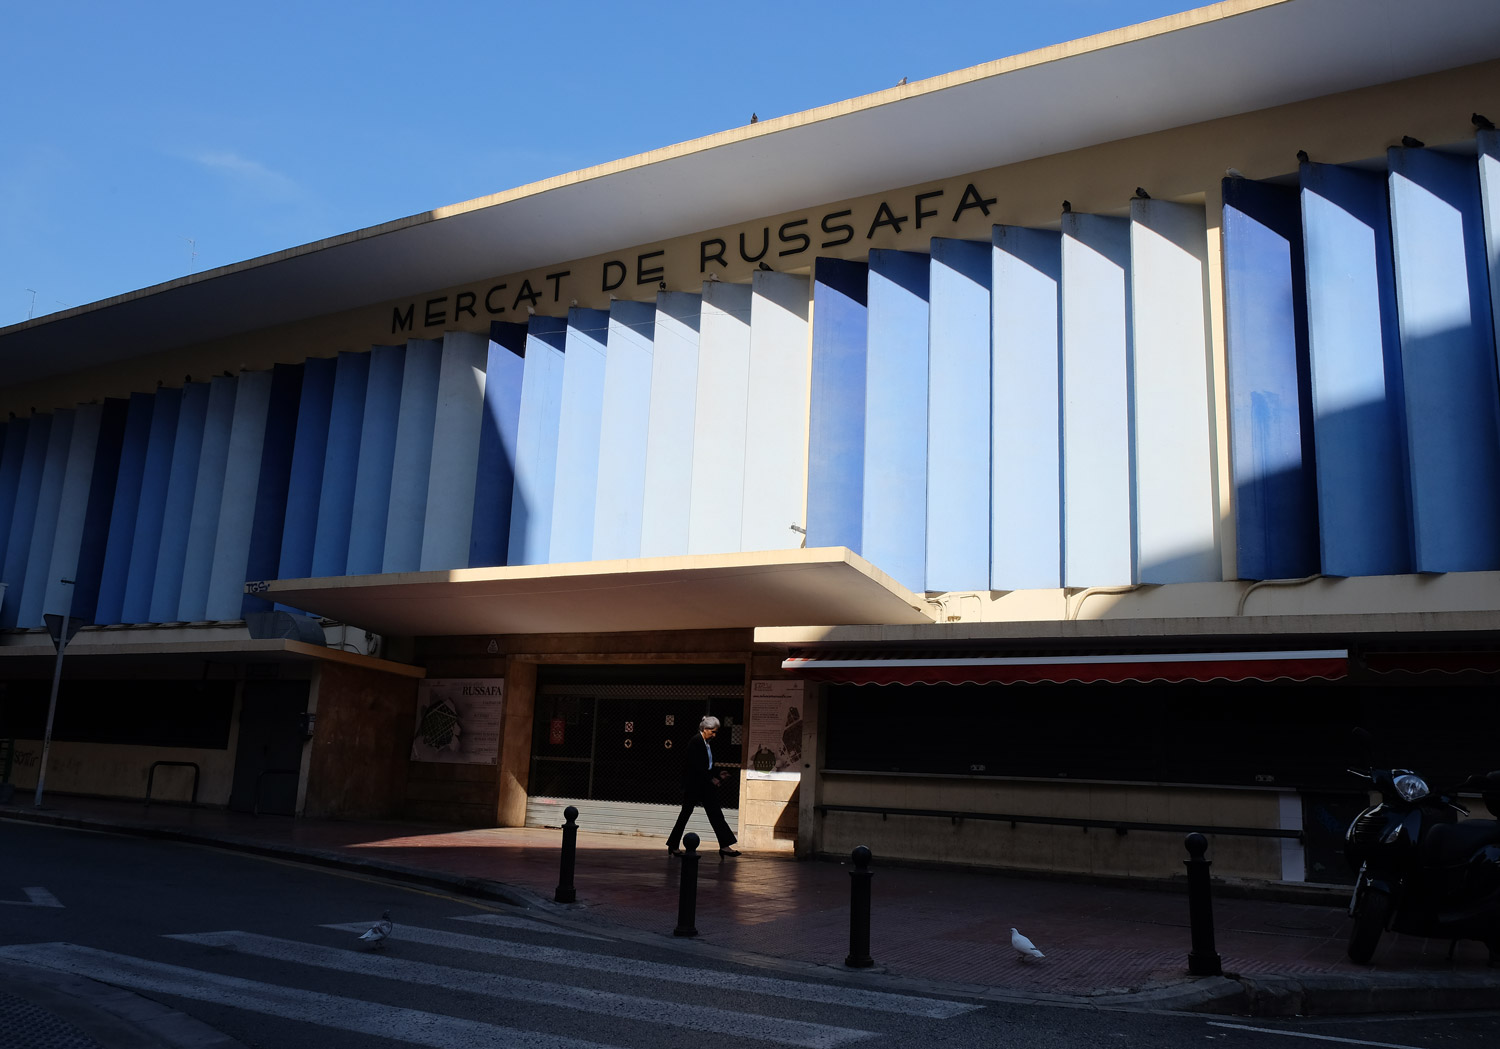 The Mercat de Russafa in Valencia's "hipster" neighbourhood